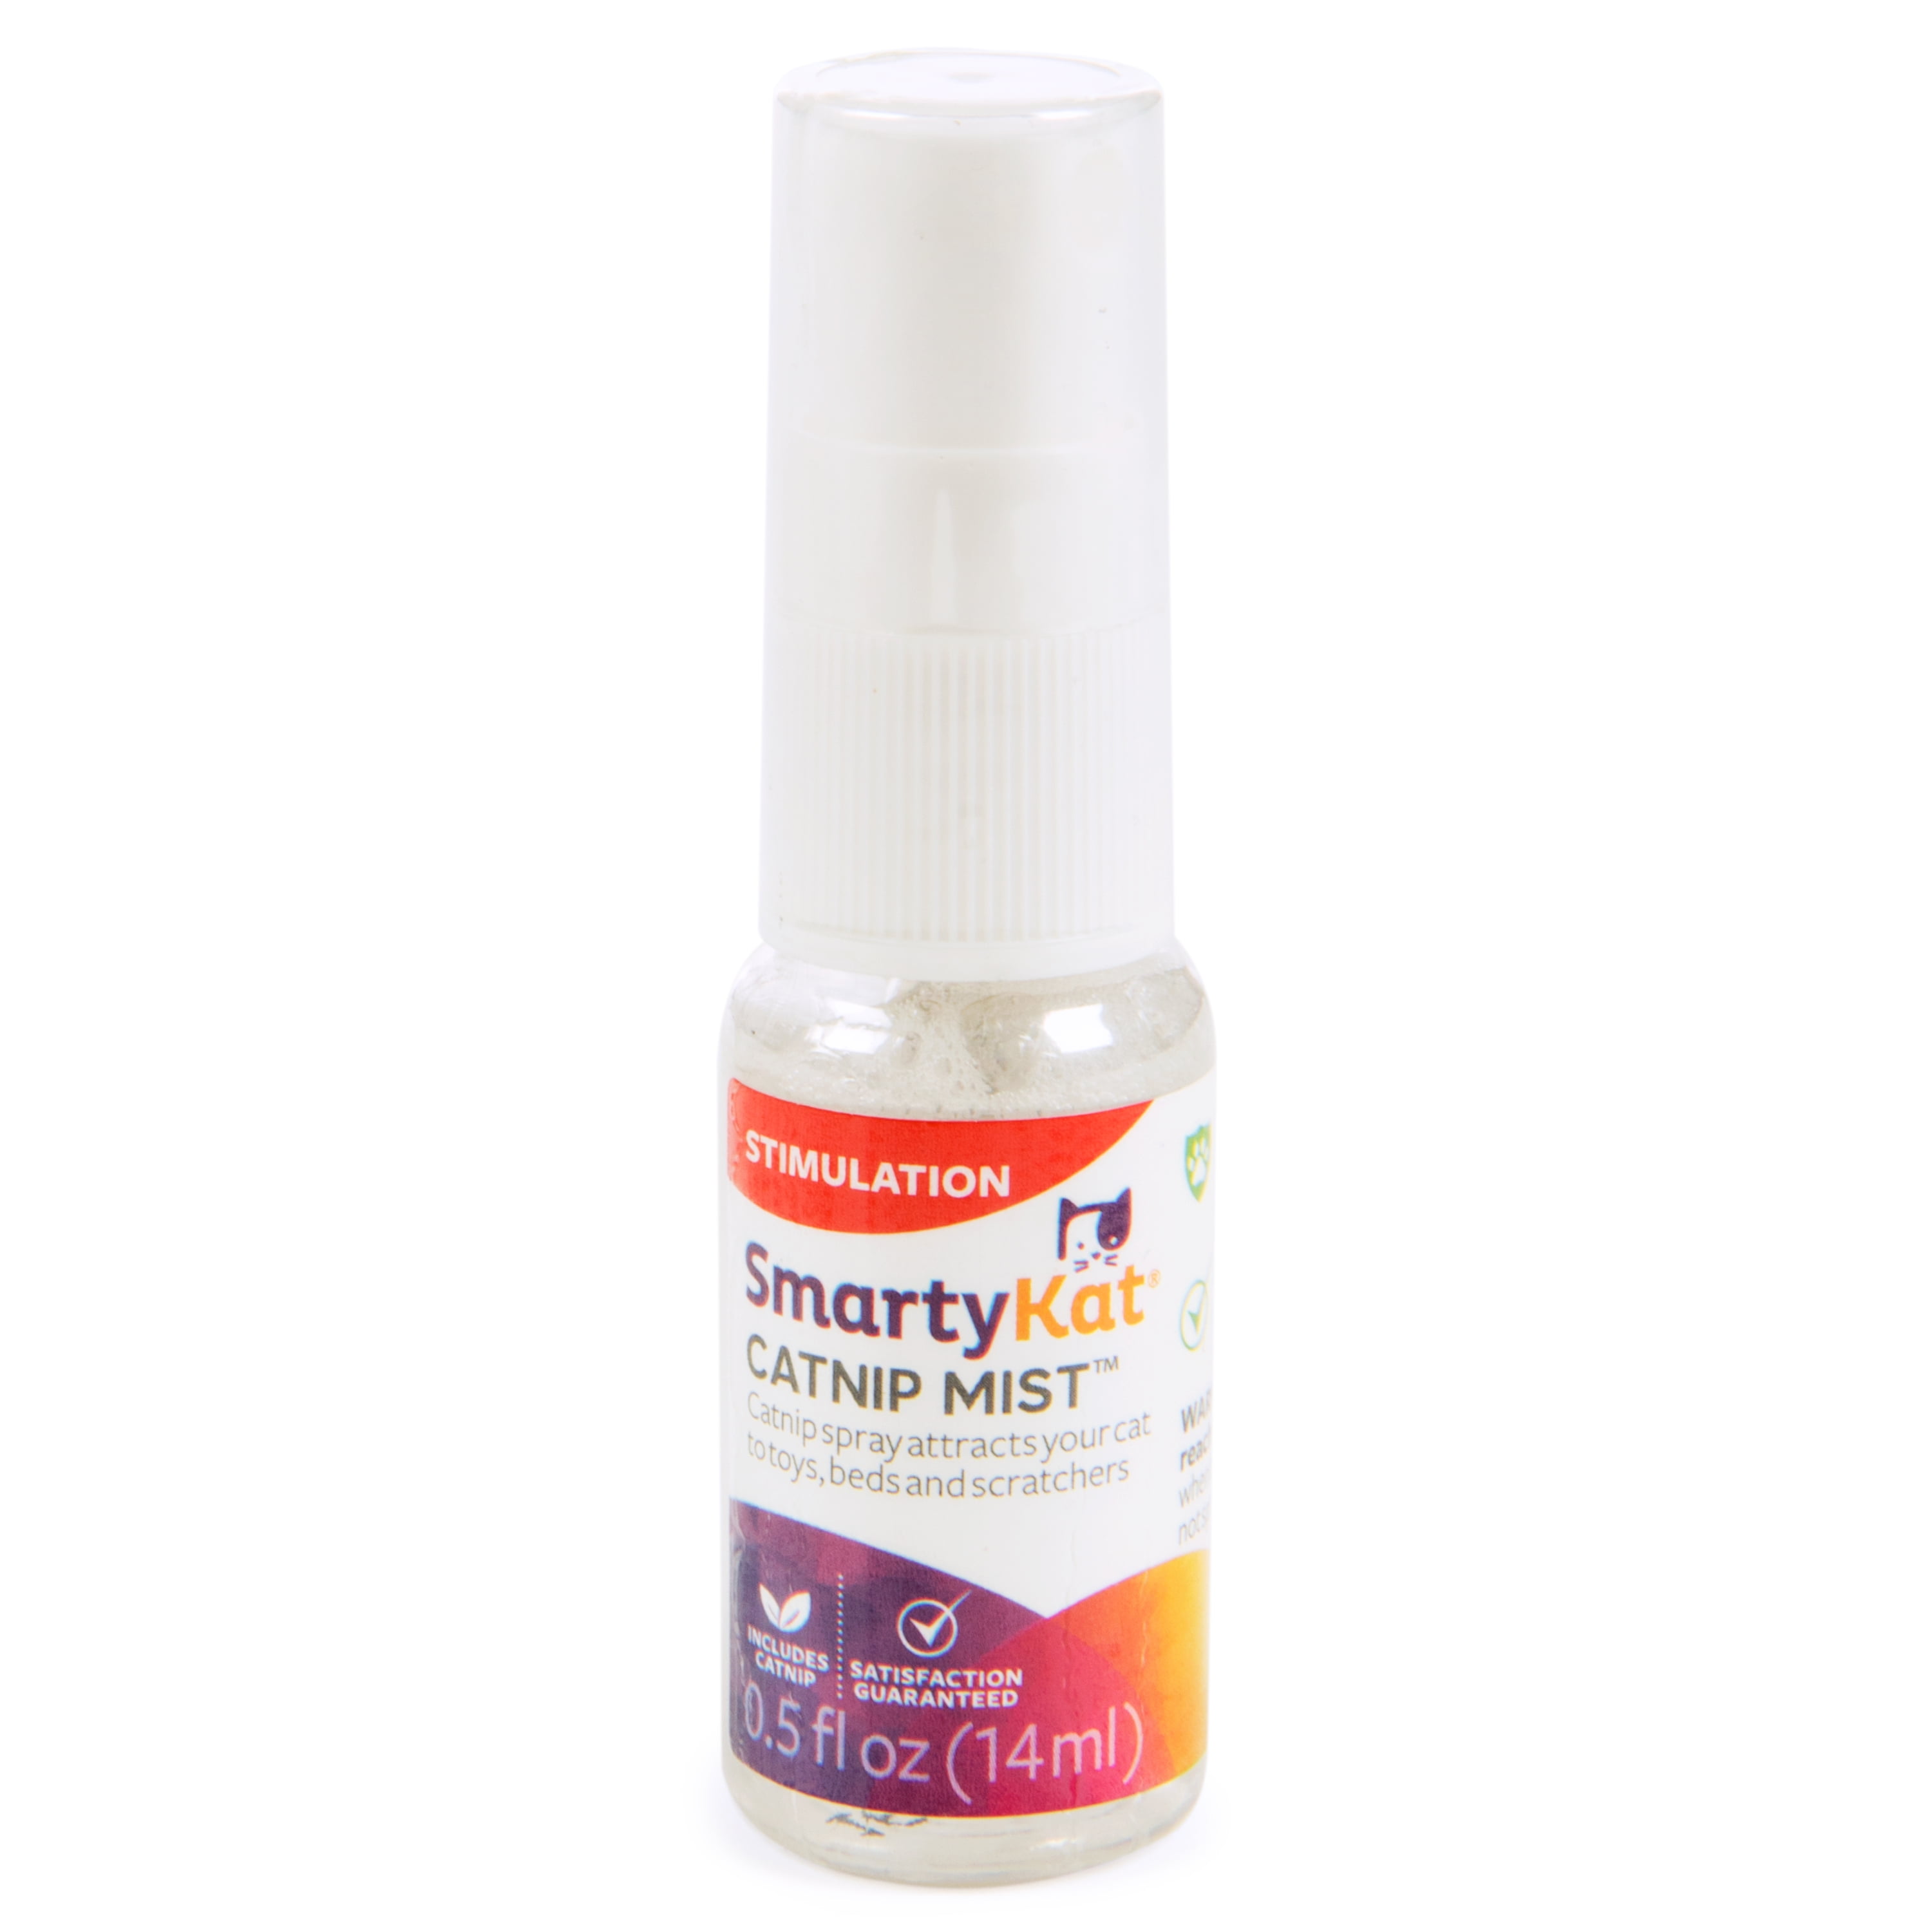 SmartyKat Catnip Mist Pure & Potent Catnip-Infused Liquid Catnip Spray,  Trial Size, 0.5 0z